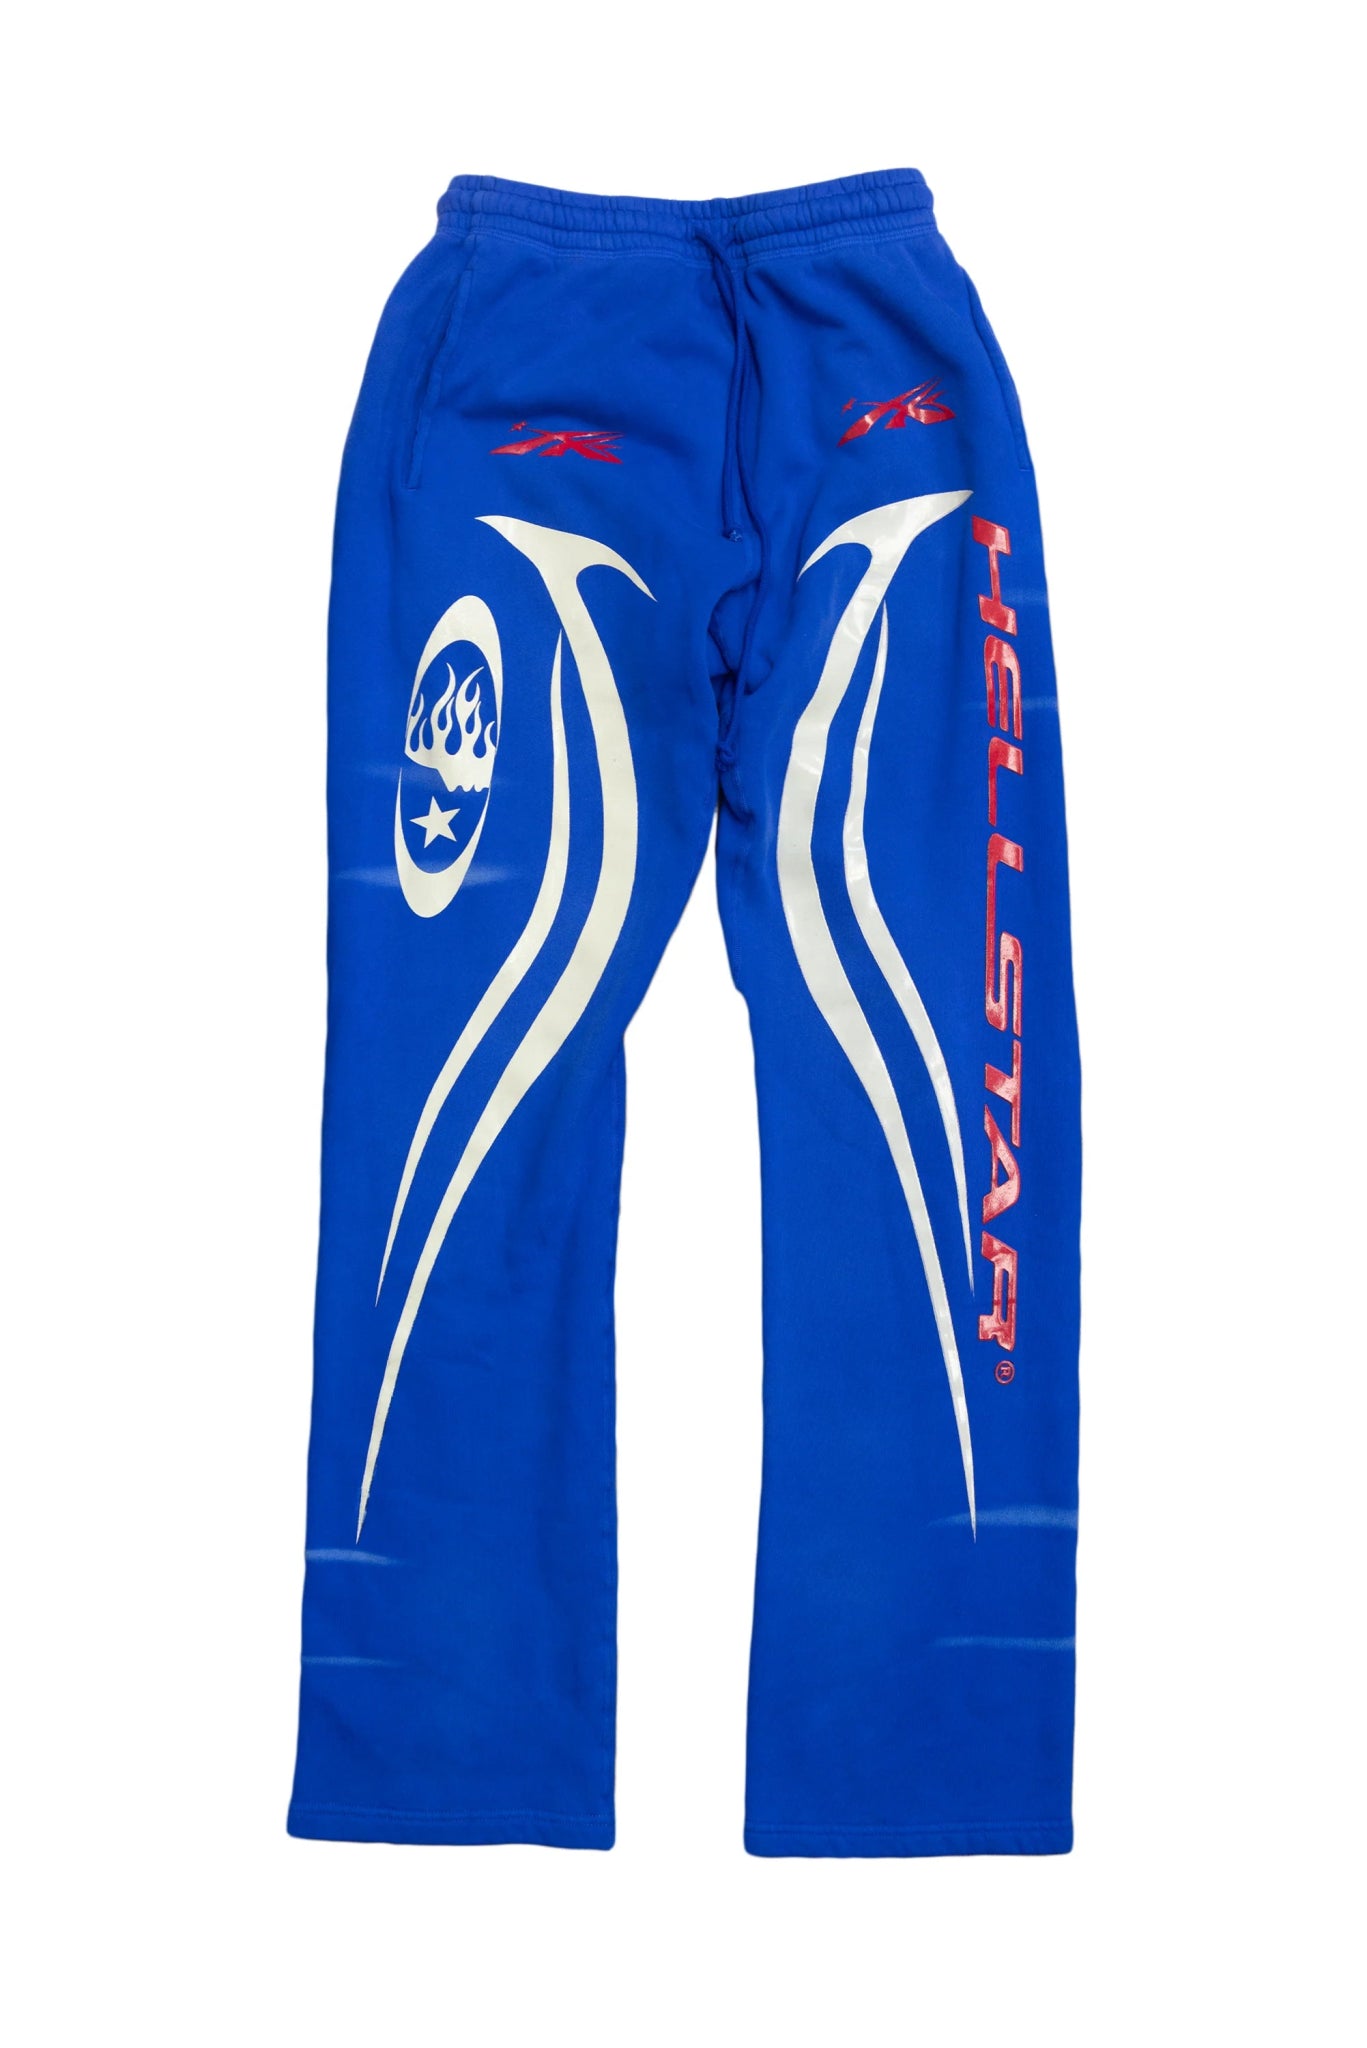 Hellstar Sports Sweatpants (Blue) - Paroissesaintefoy Sneakers Sale Online